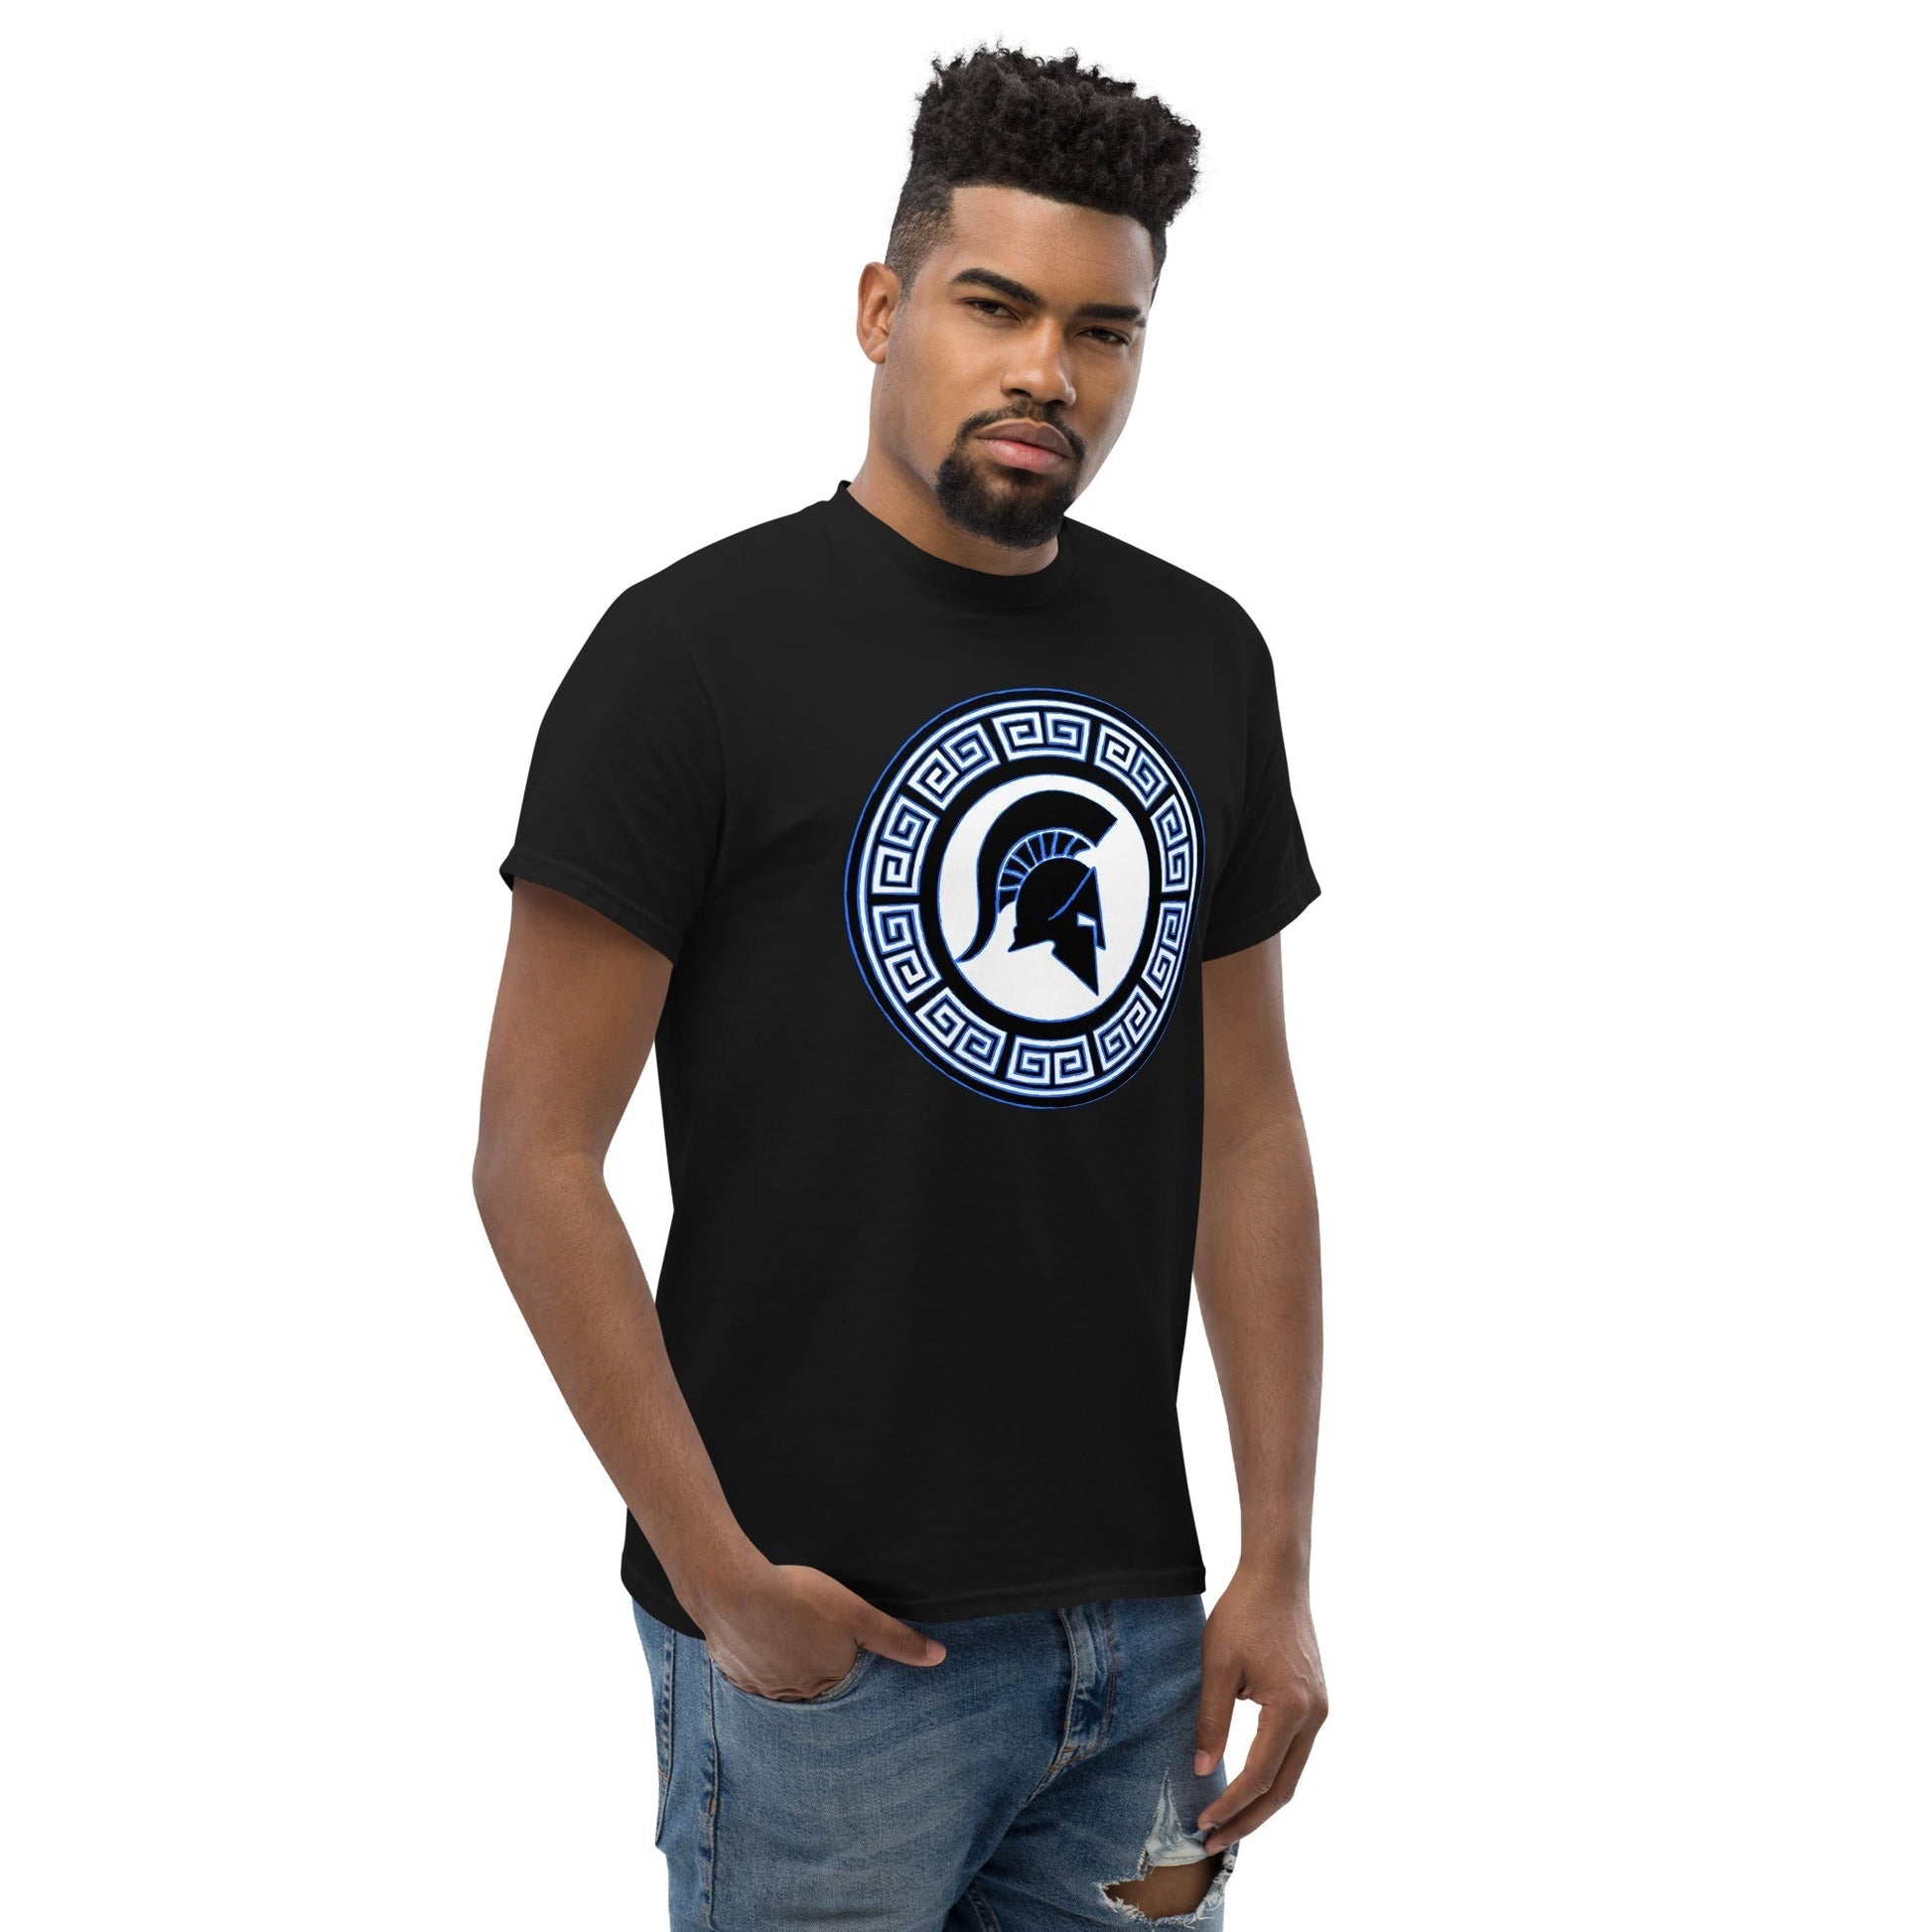 Scar Design T shirt Spartan Warrior Shield T-shirt